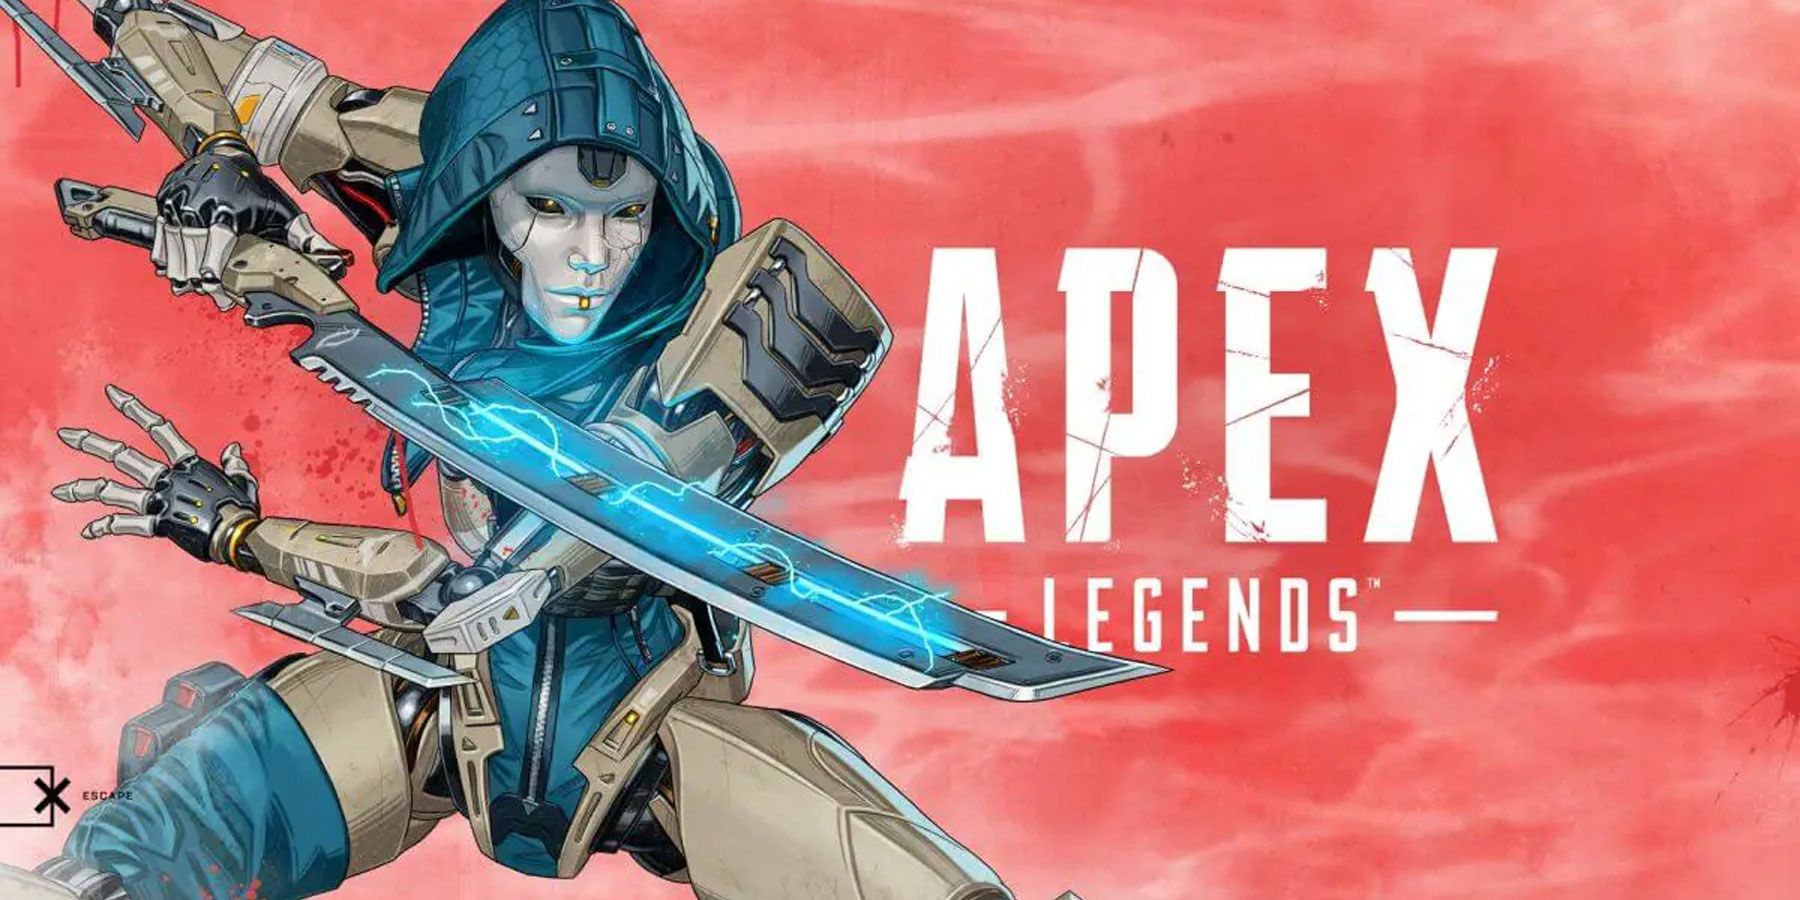 apex-legends-ash